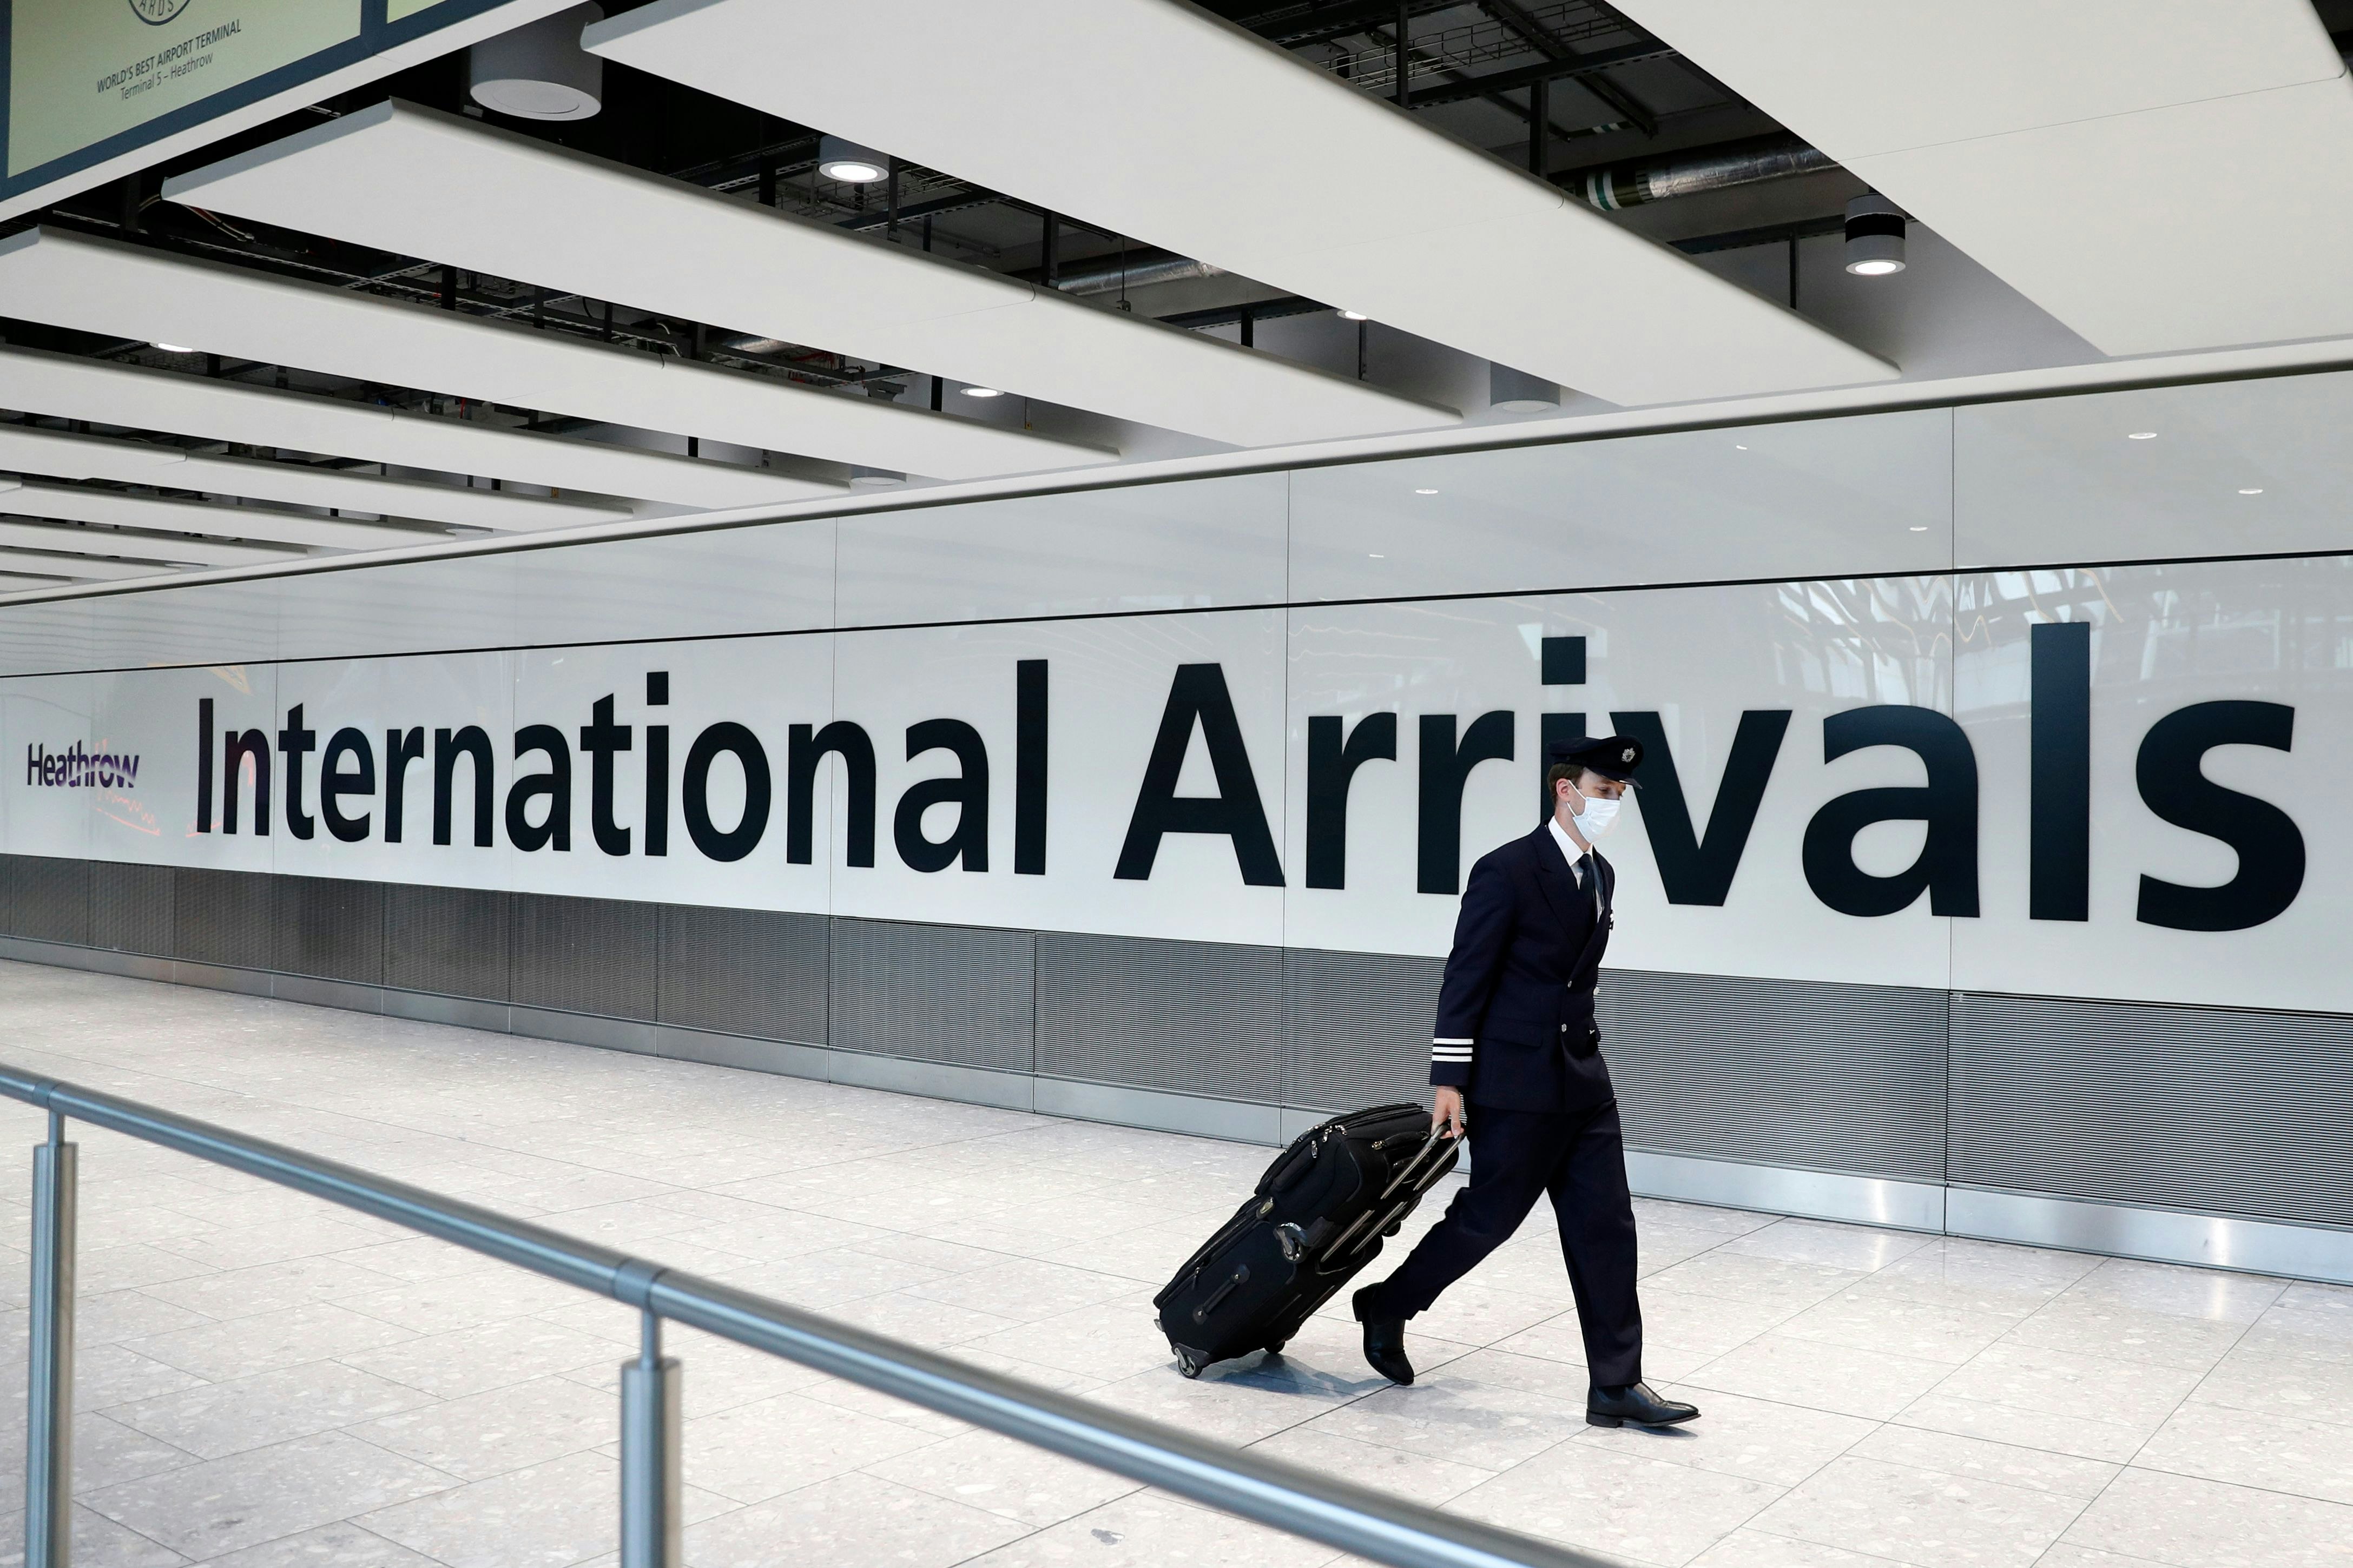 A pilot arrives at London's Heathrow airport